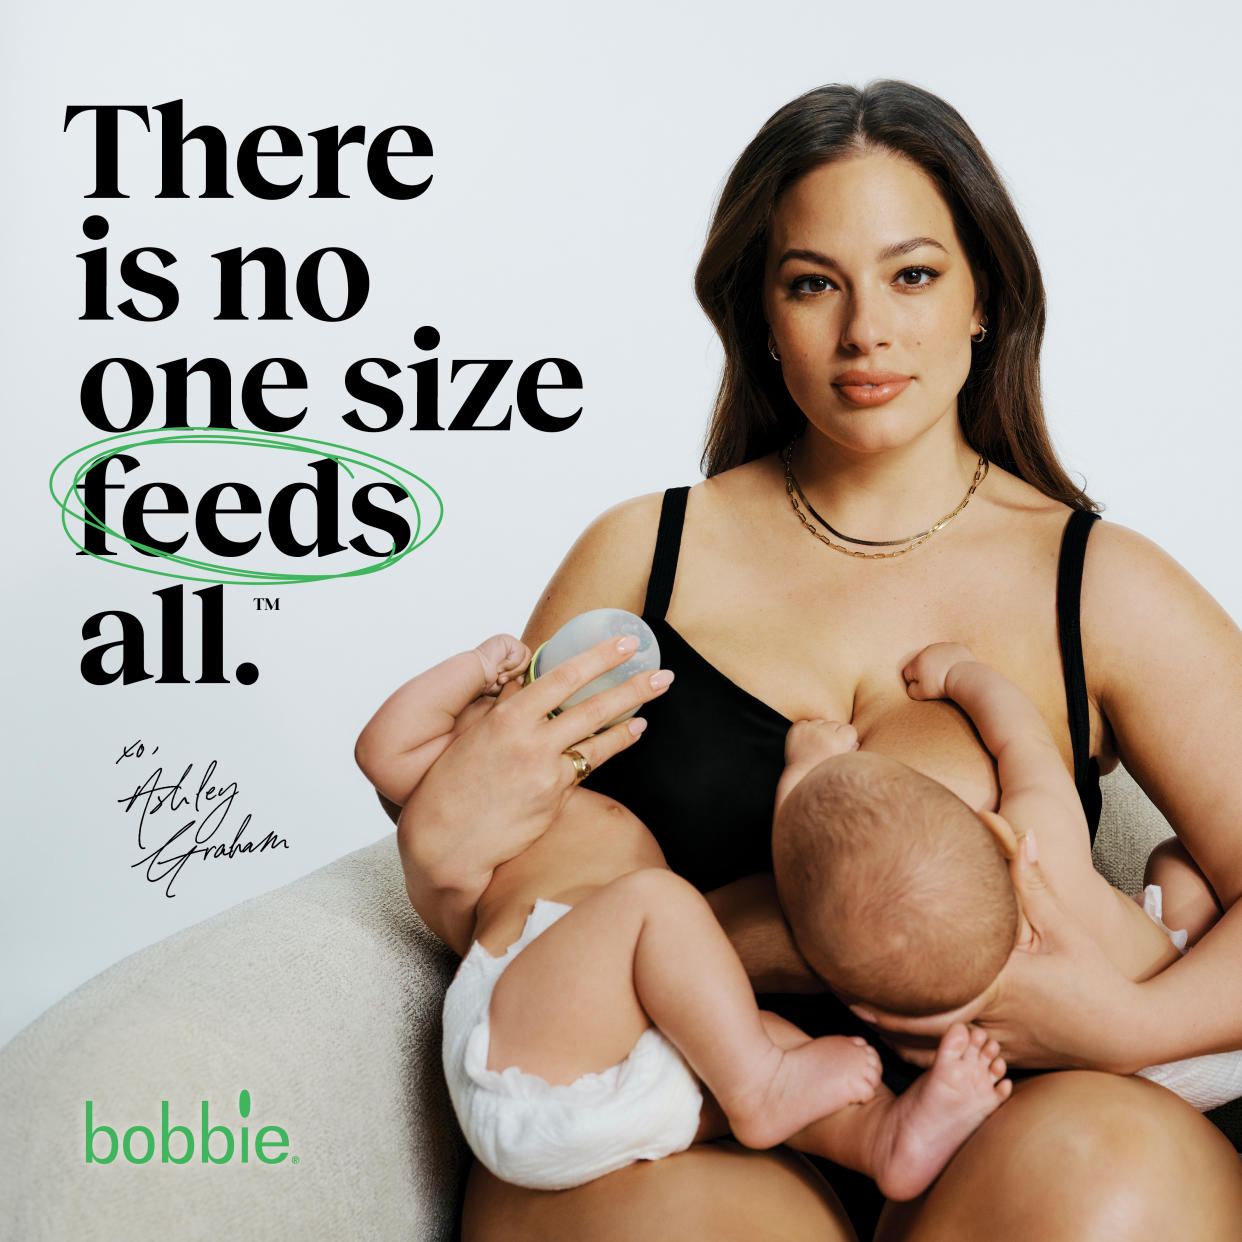 Ashley Graham's new billboard for Bobbie sees her combo feeding her twin boys. (Photo: Bobbie)